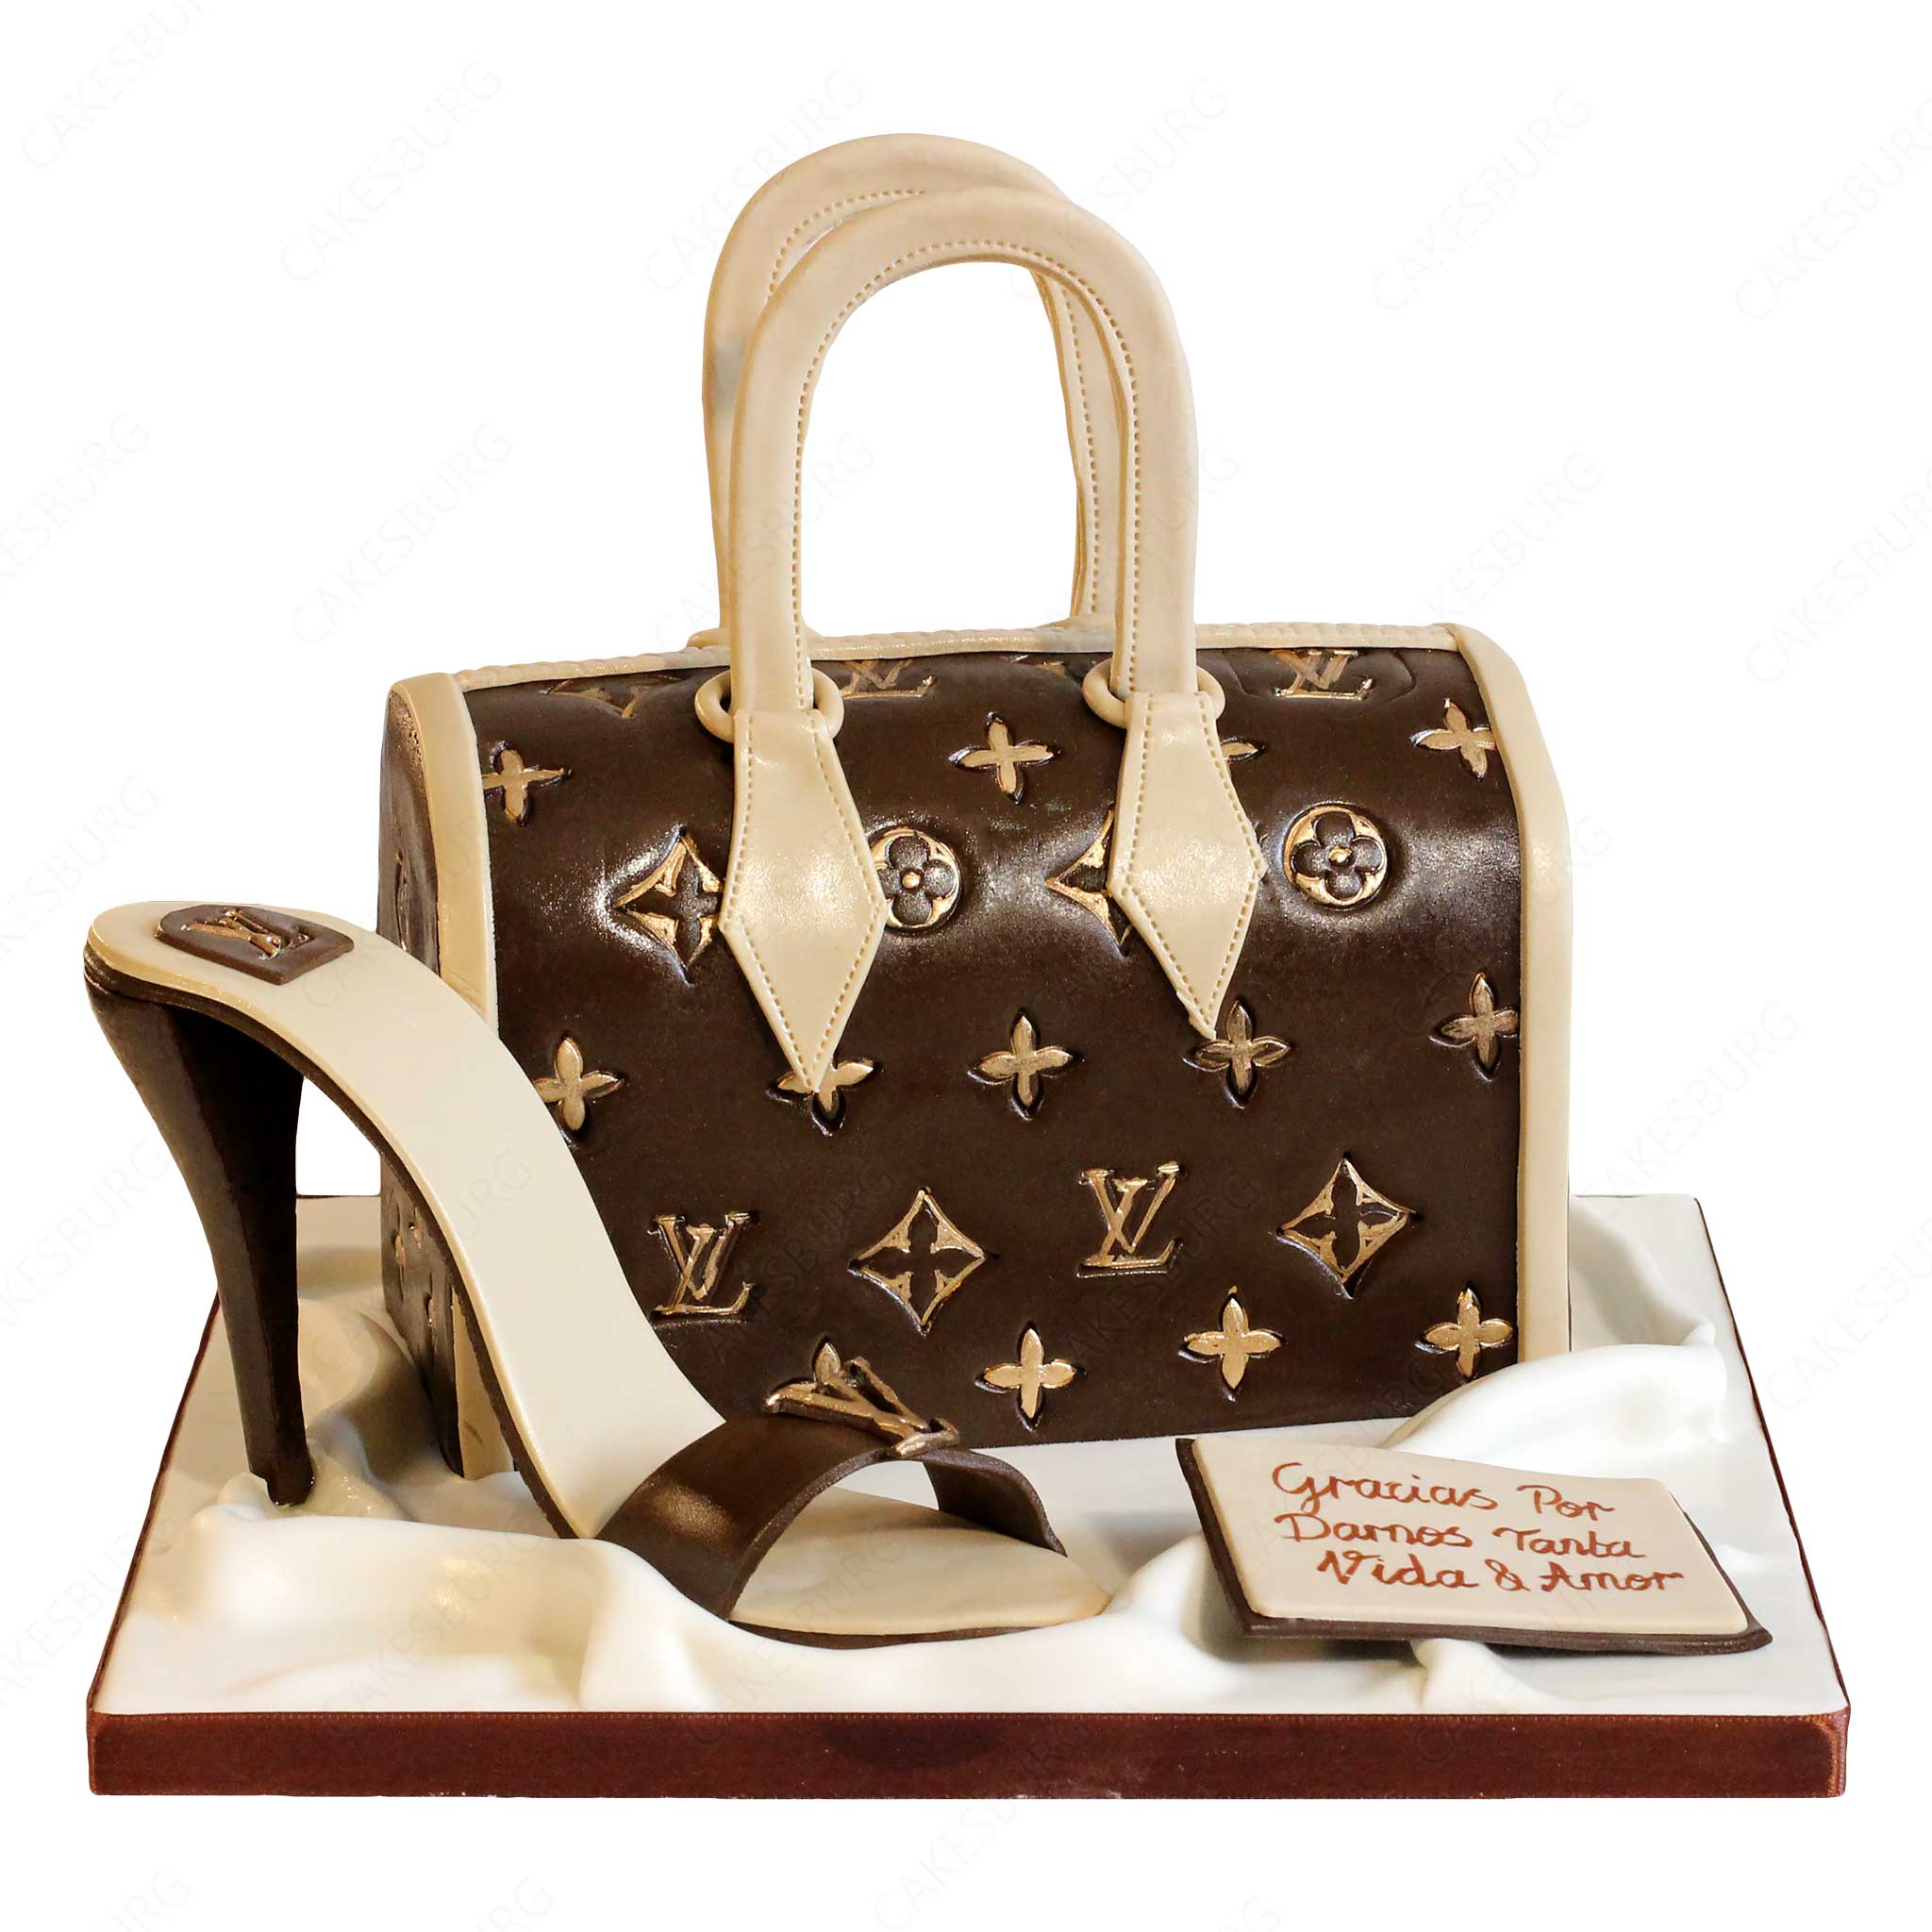 Louis Vuitton Birthday Cake: Louis Vuitton Shoe box, bag - CakesDecor